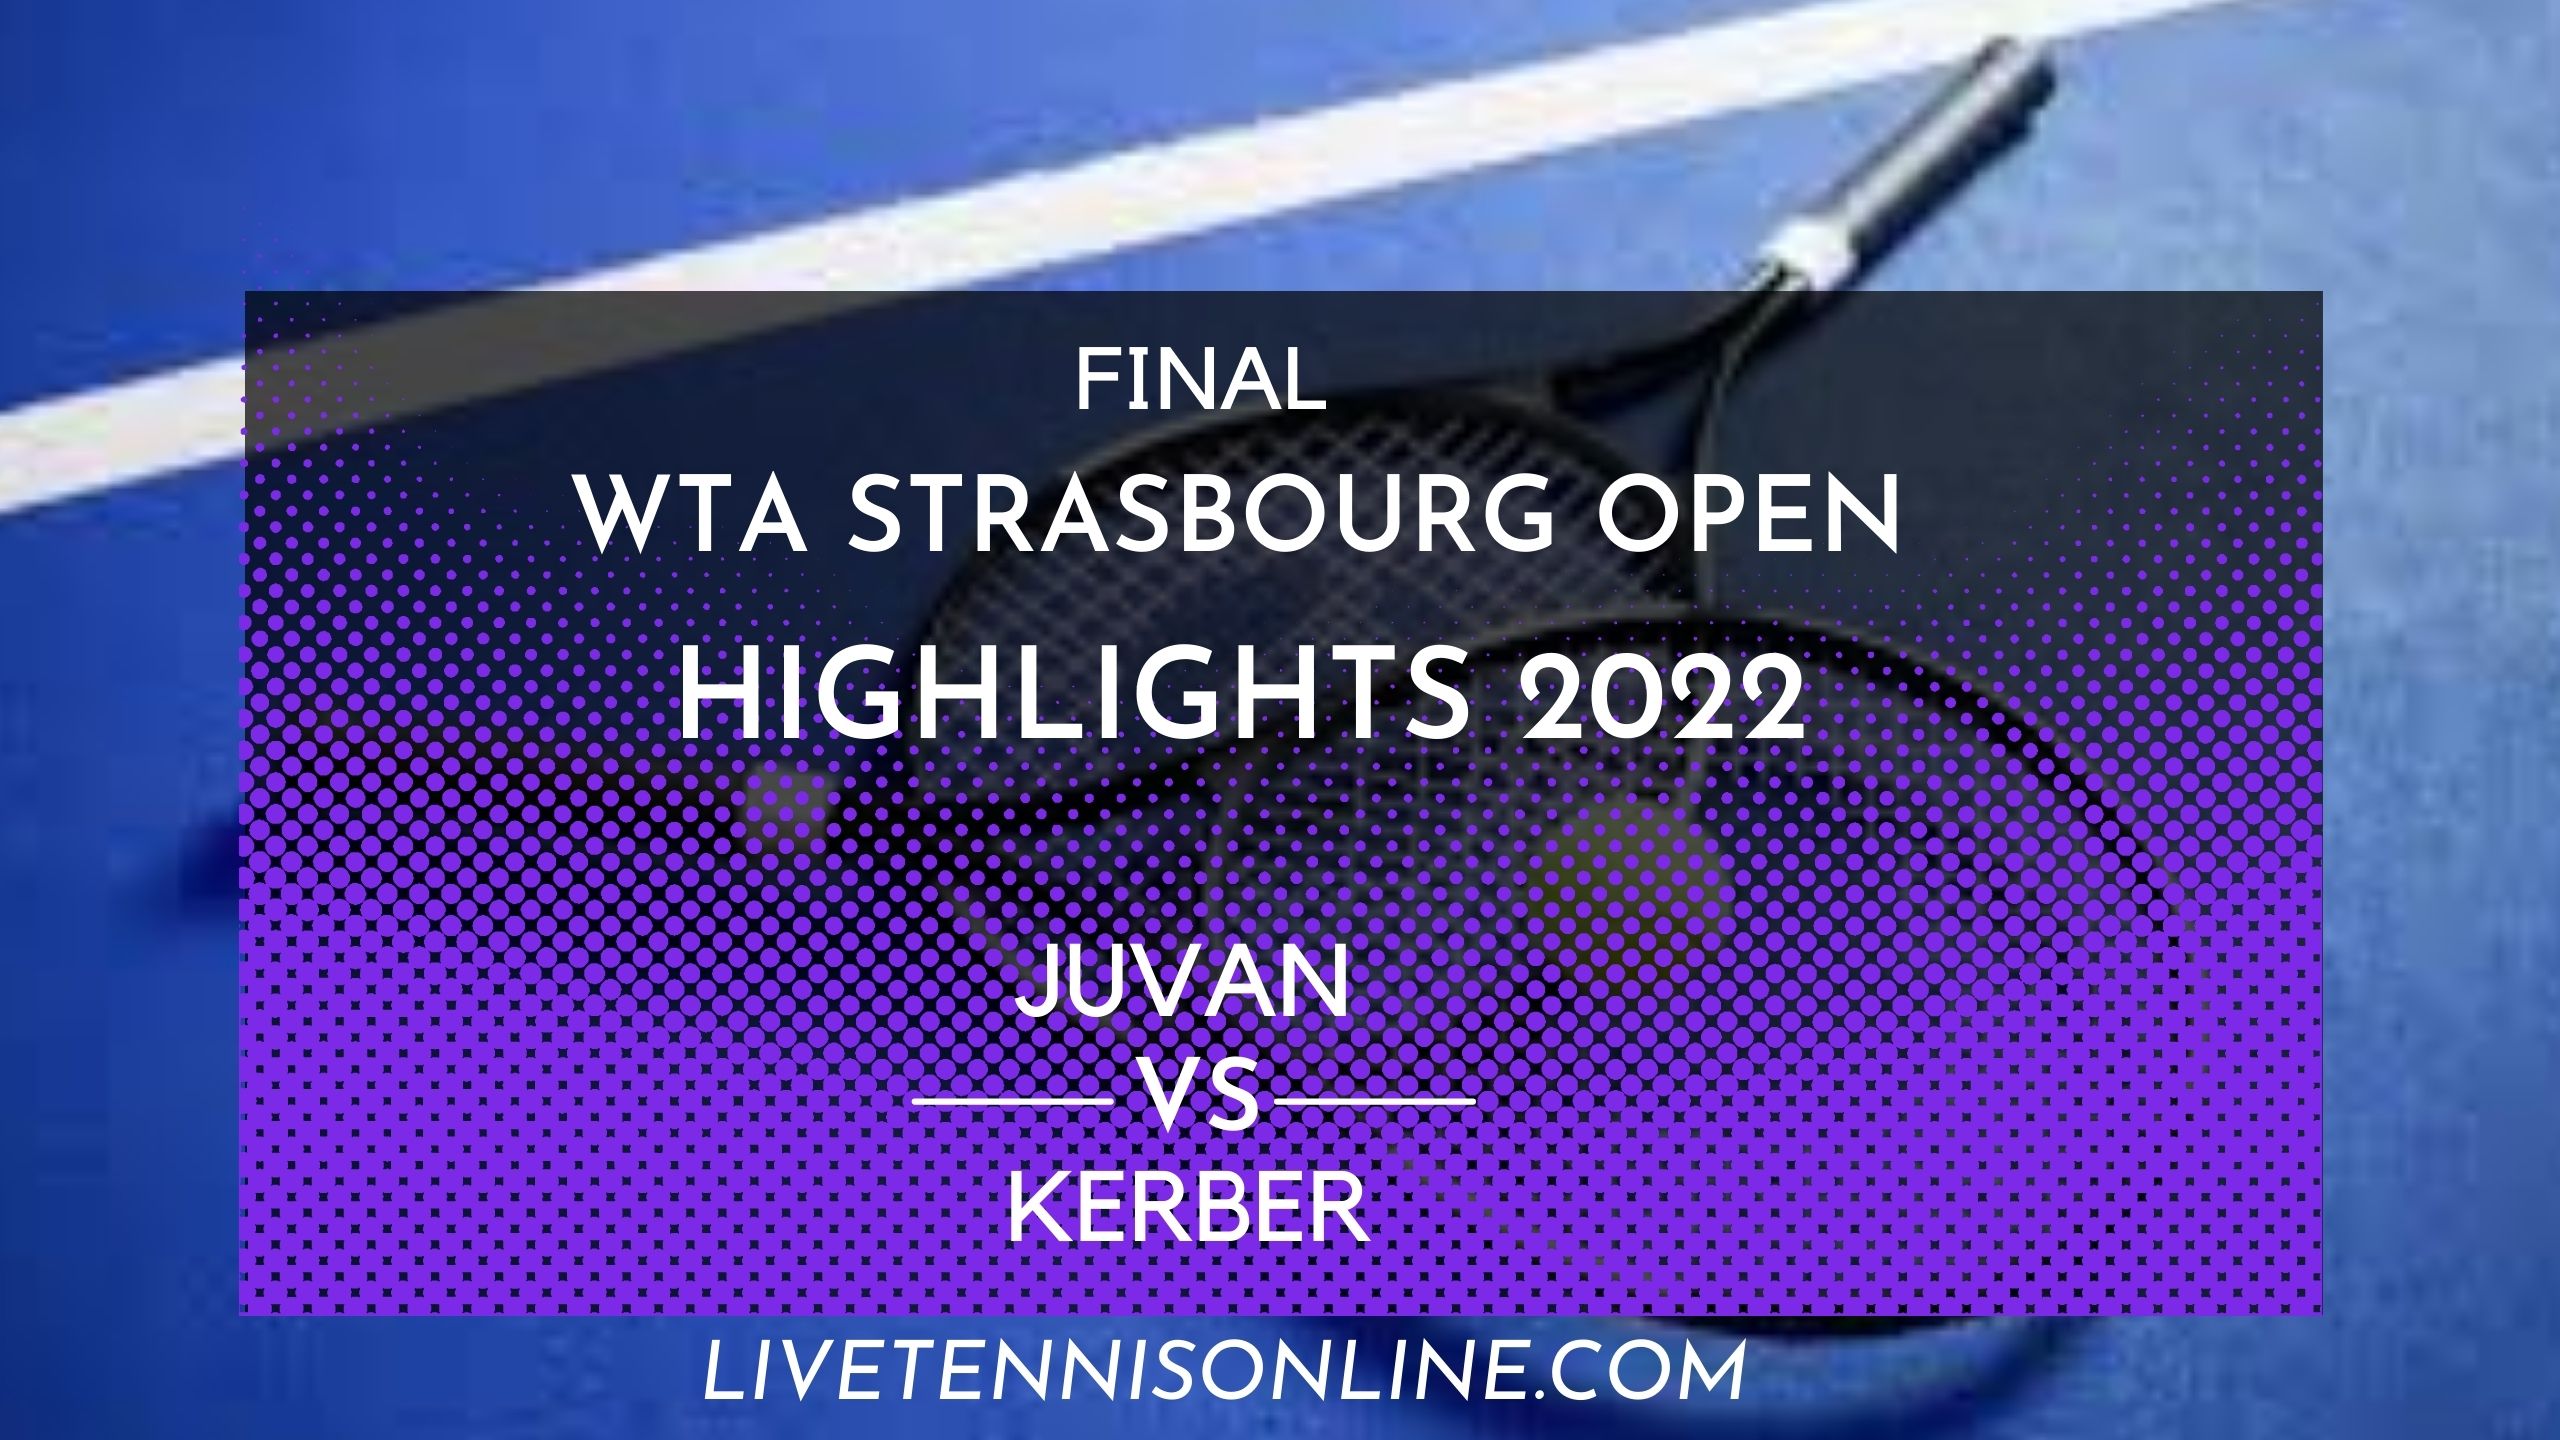 Juvan Vs Kerber Final Highlights 2022